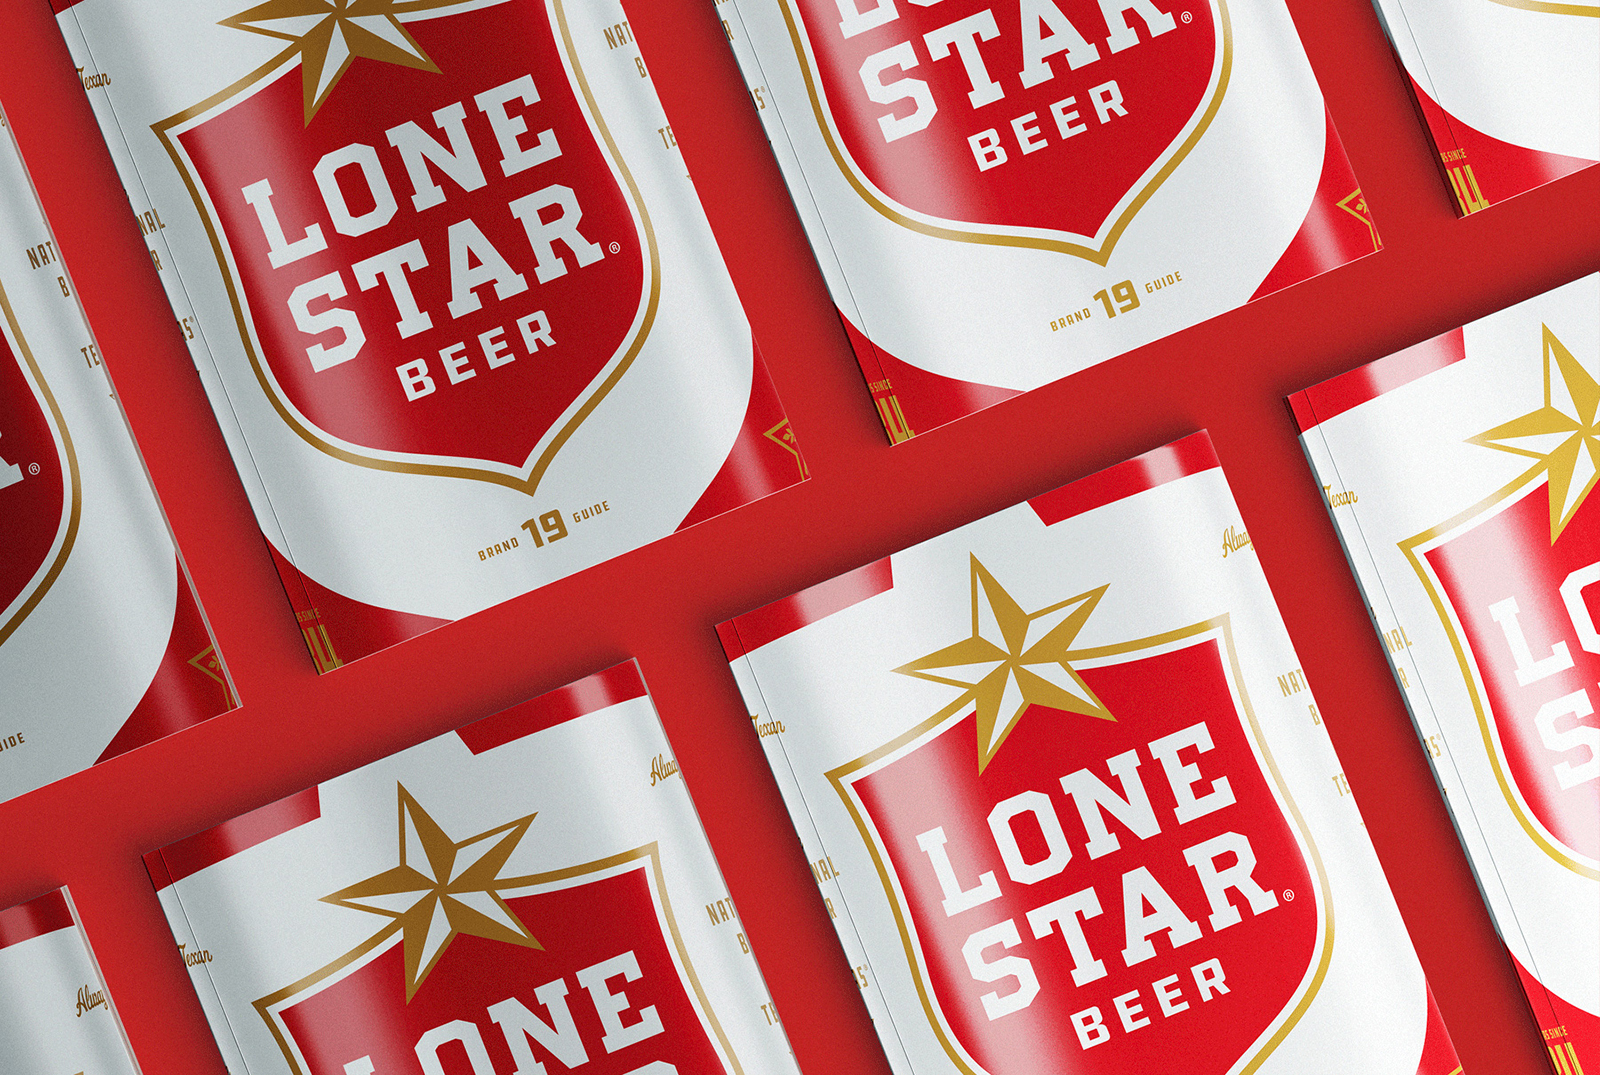  Lone Star孤星啤酒品牌更新全新的品牌VI视觉和包装设计-深圳VI设计9